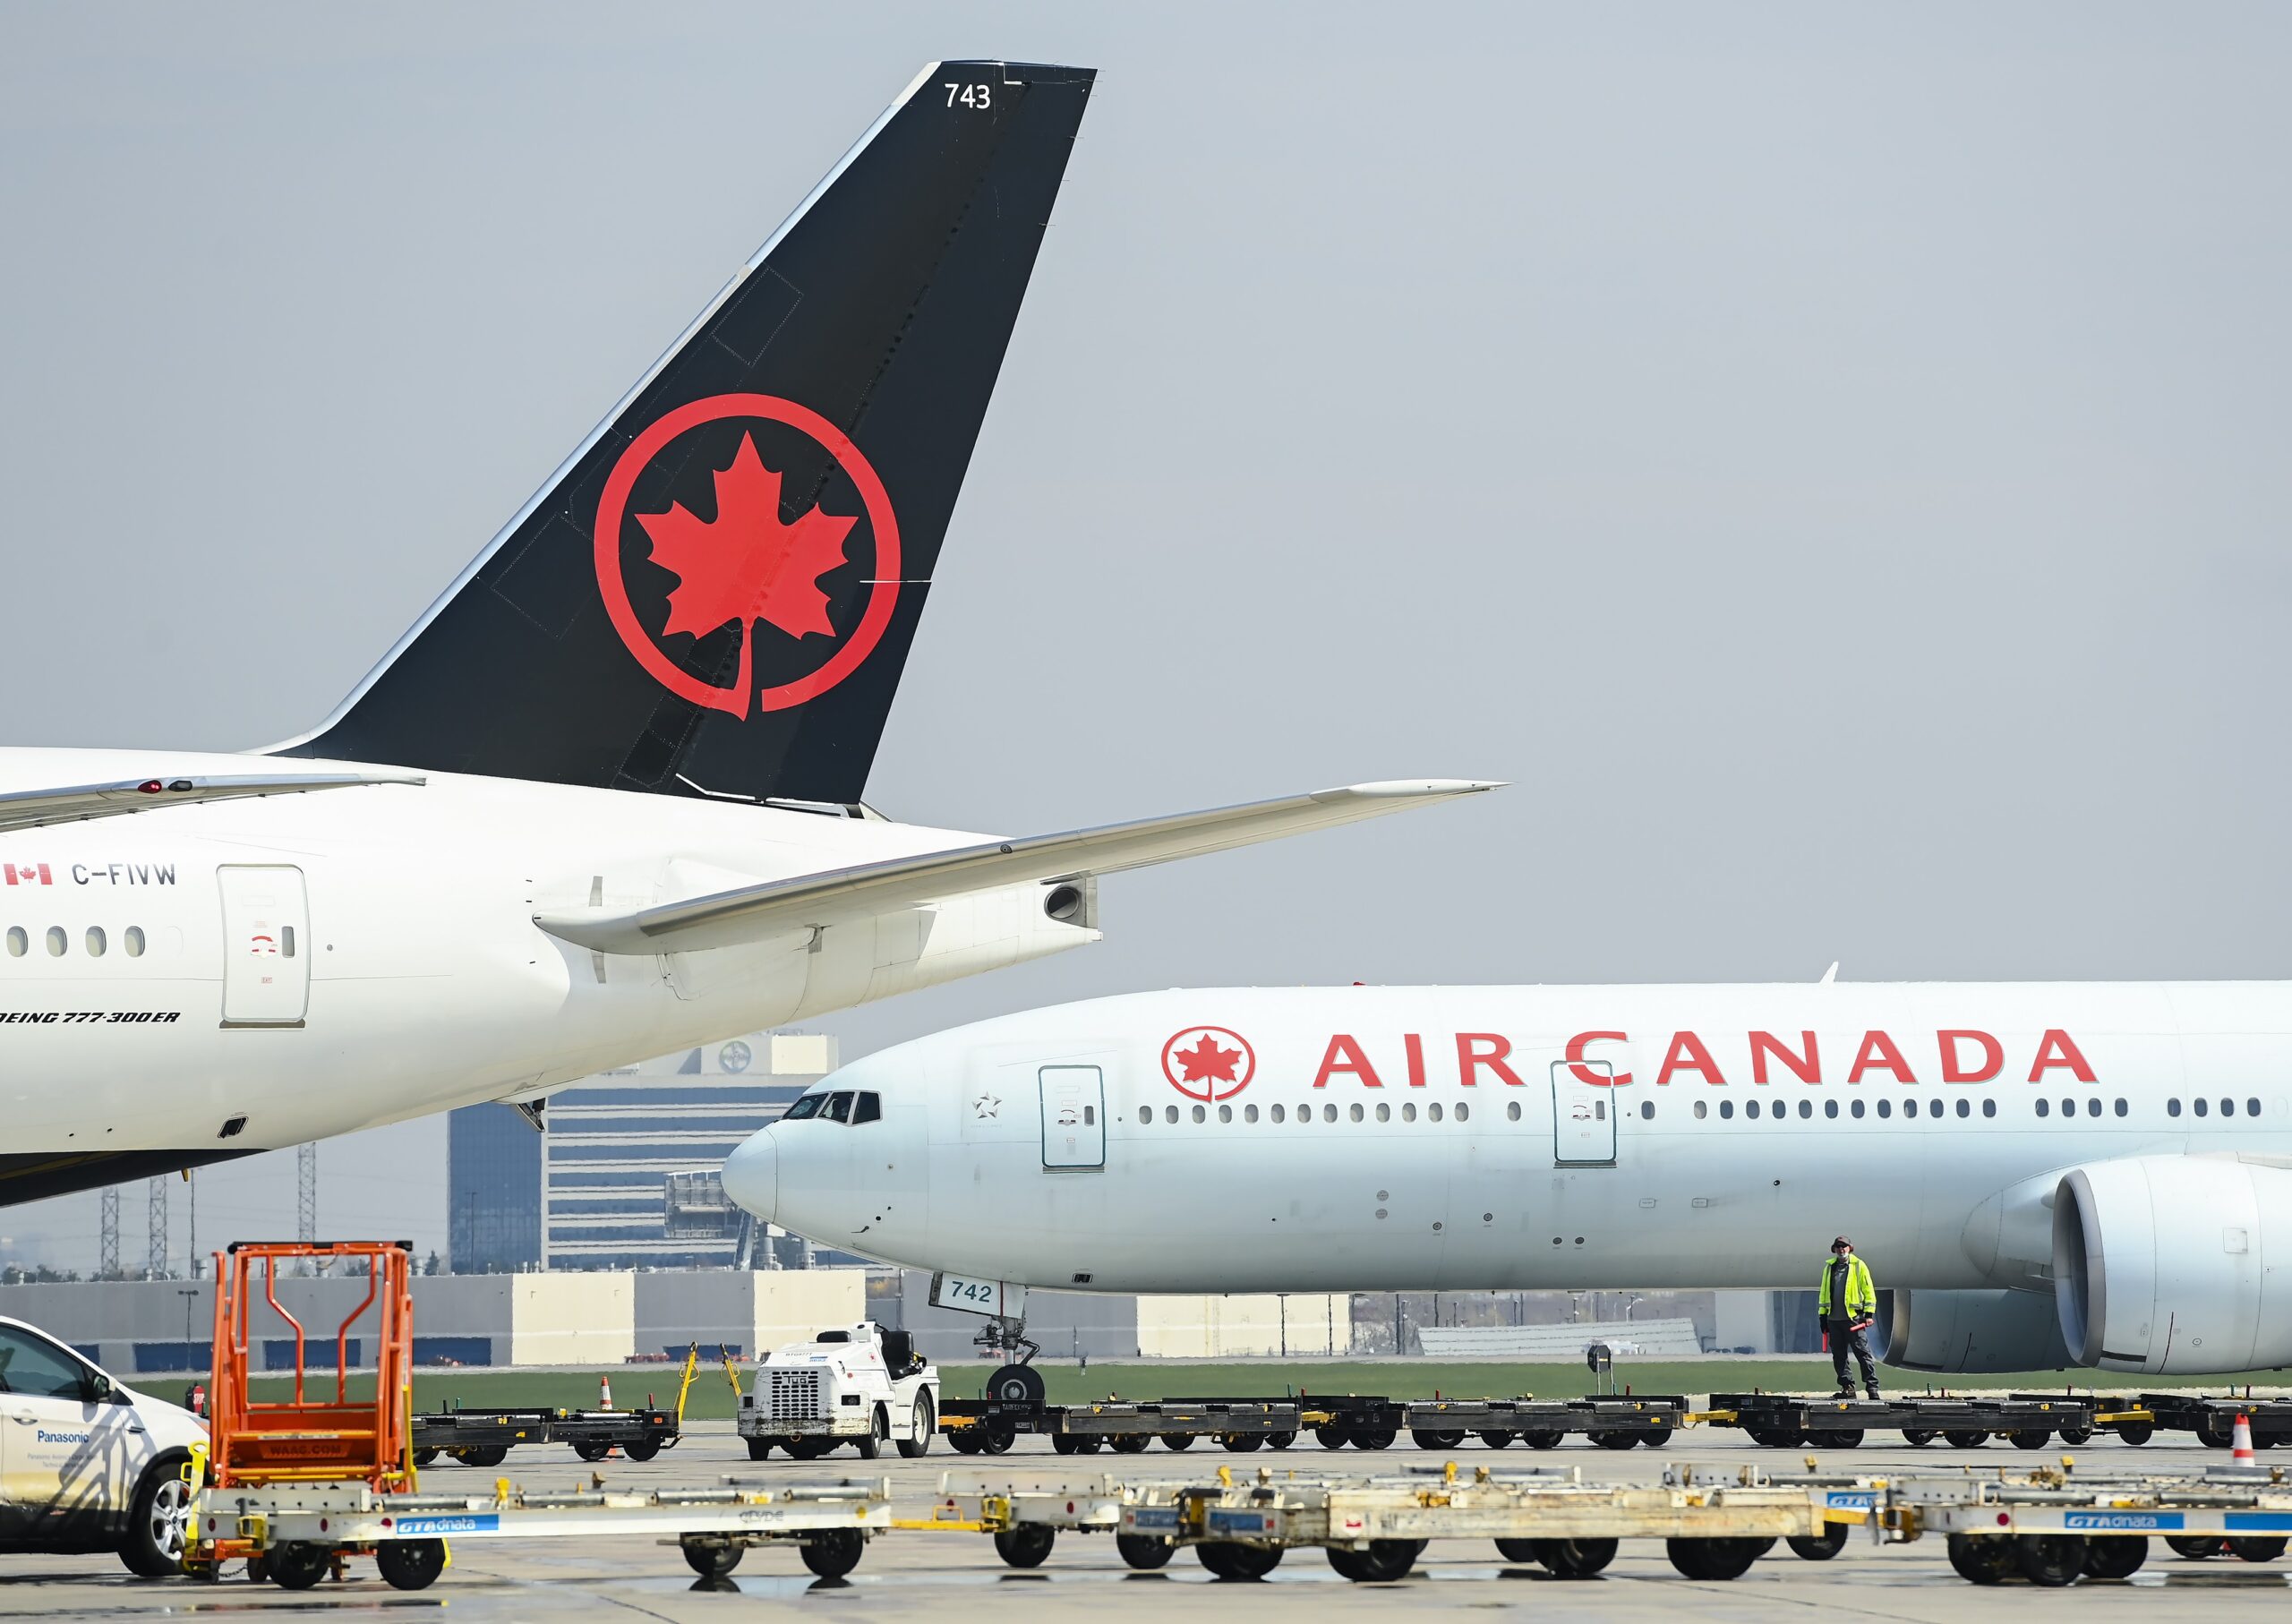 کاهش خدمات ایر کانادا فرودگاه بین المللی کلگری